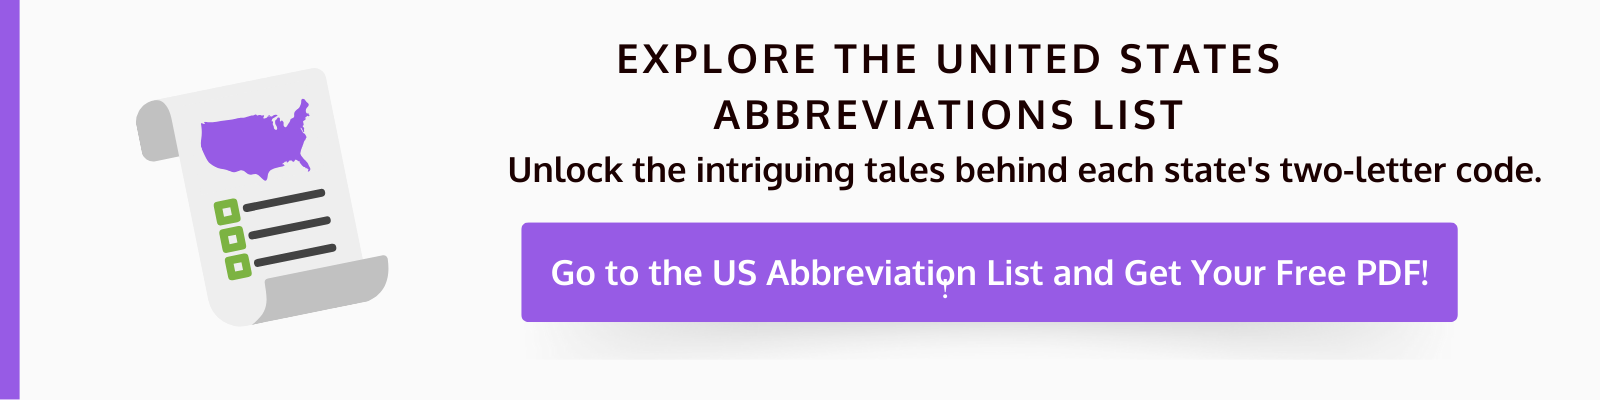 United States Abbreviations List